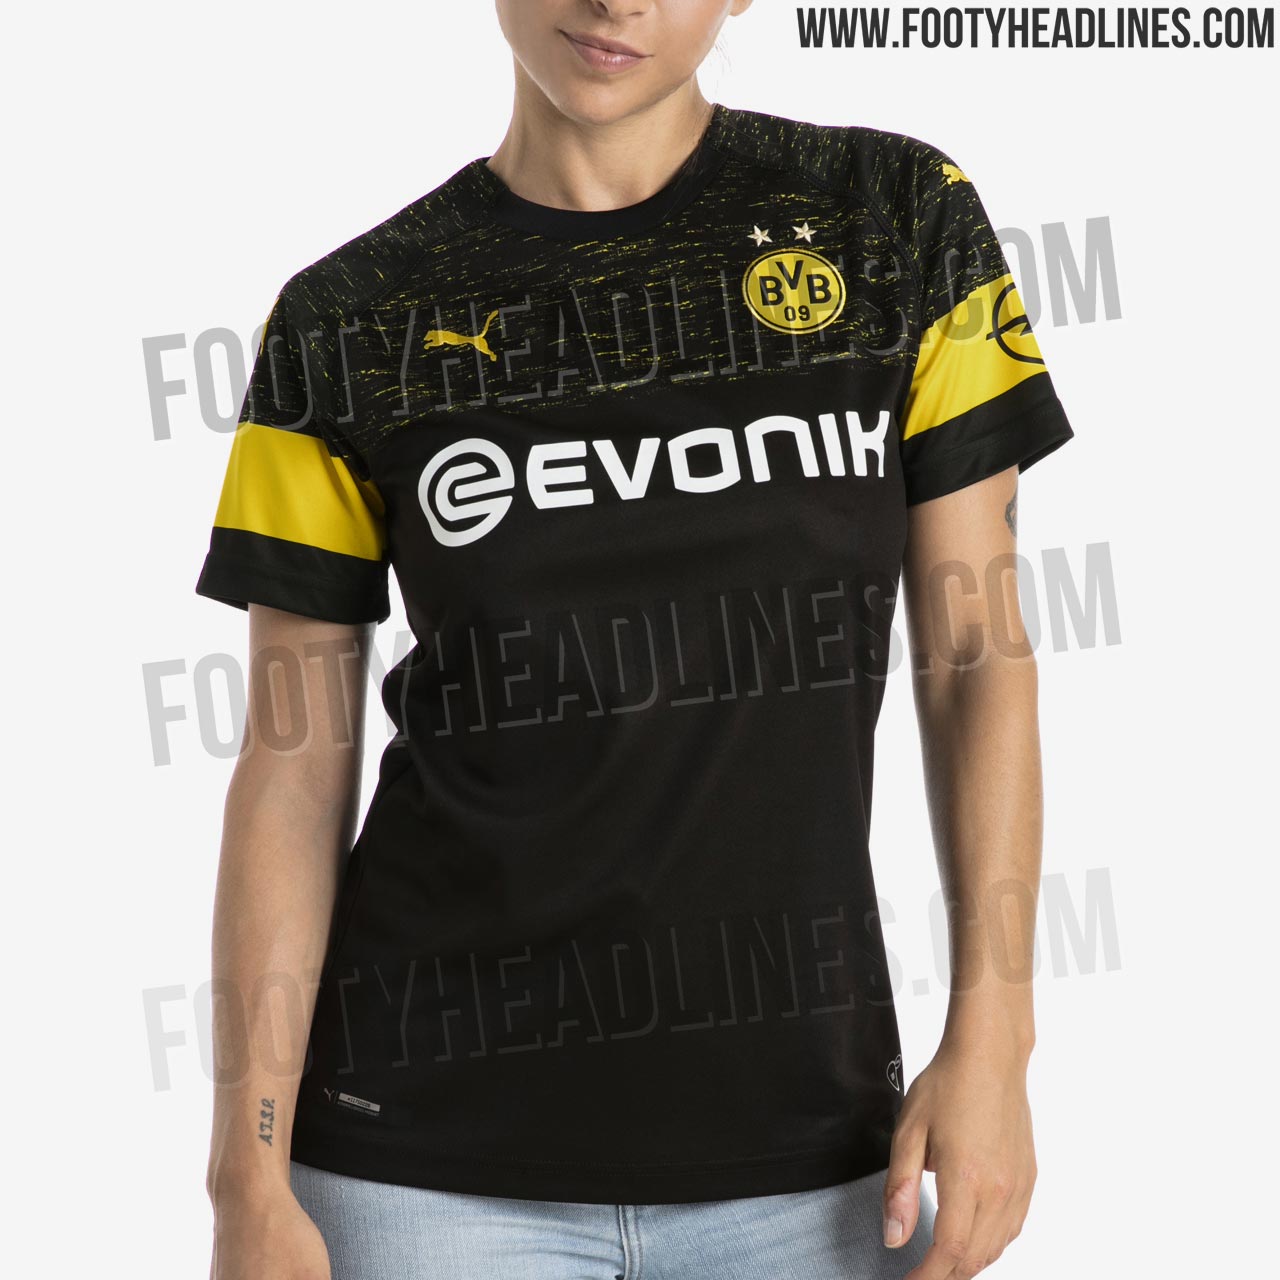 BVB Borussia Dortmund Cup Football Home Jersey Shirt Tee Top 2018 19 Manches Longues